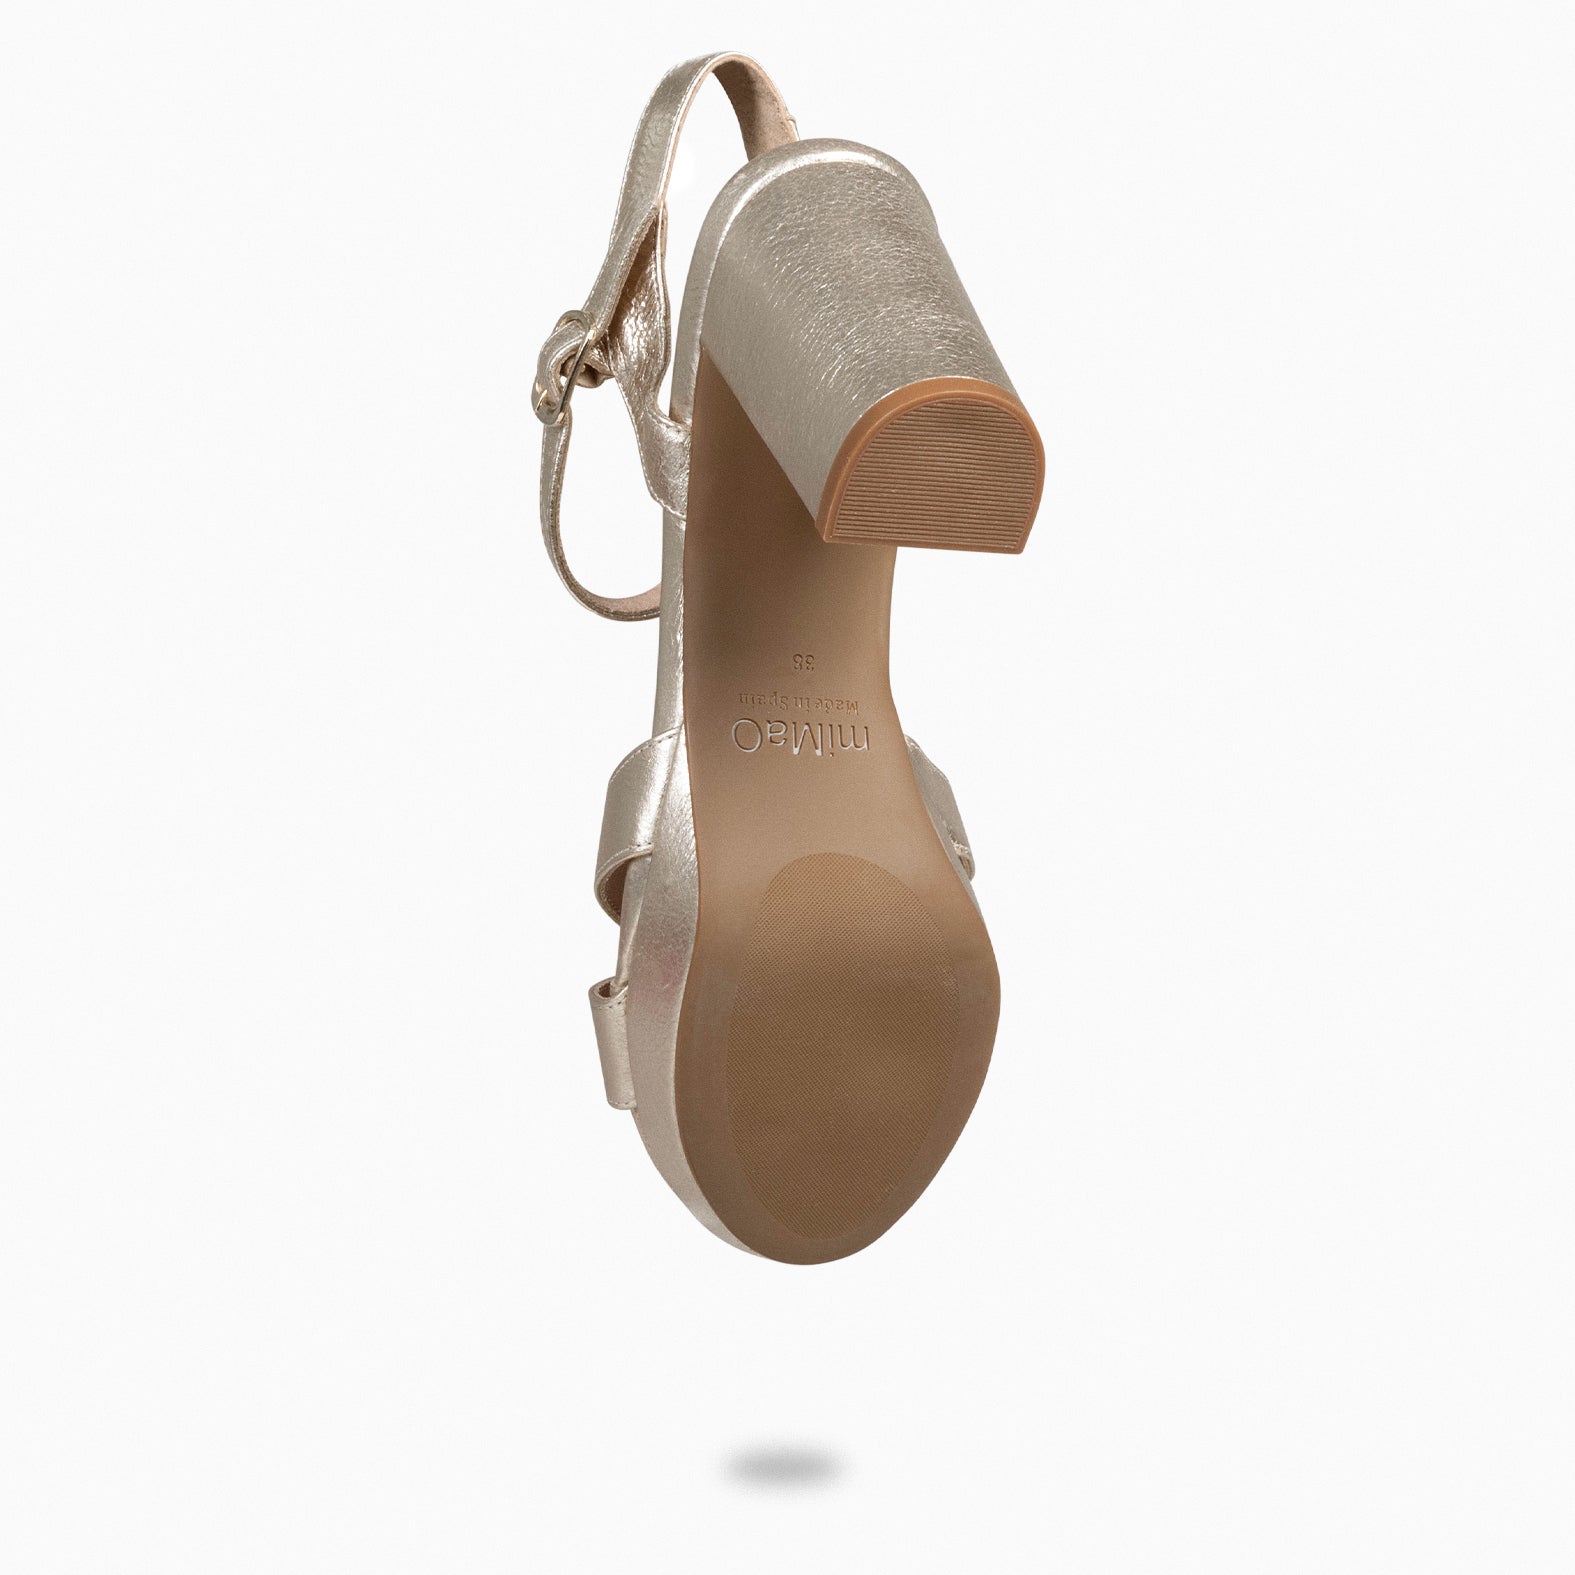 PARIS – GOLDEN high heel sandal with platform